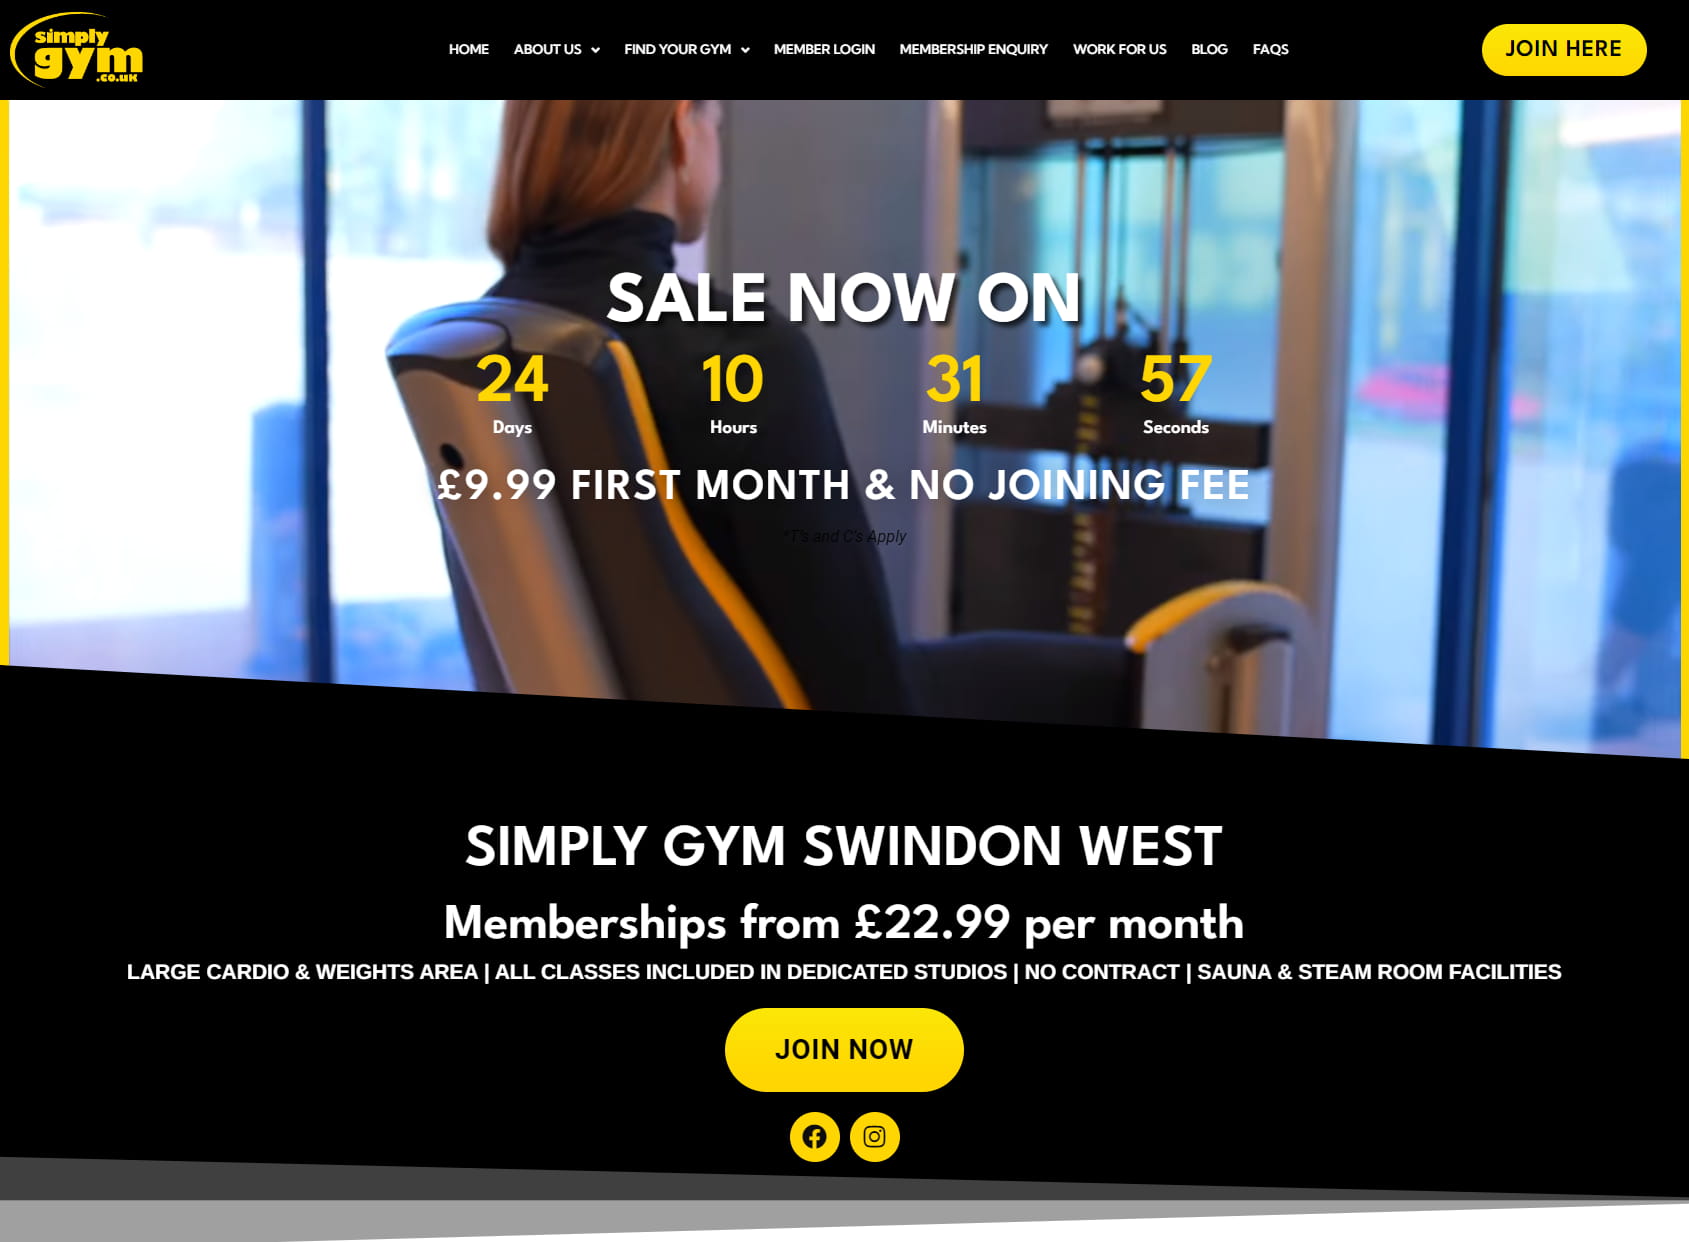 Simply Gym Swindon West